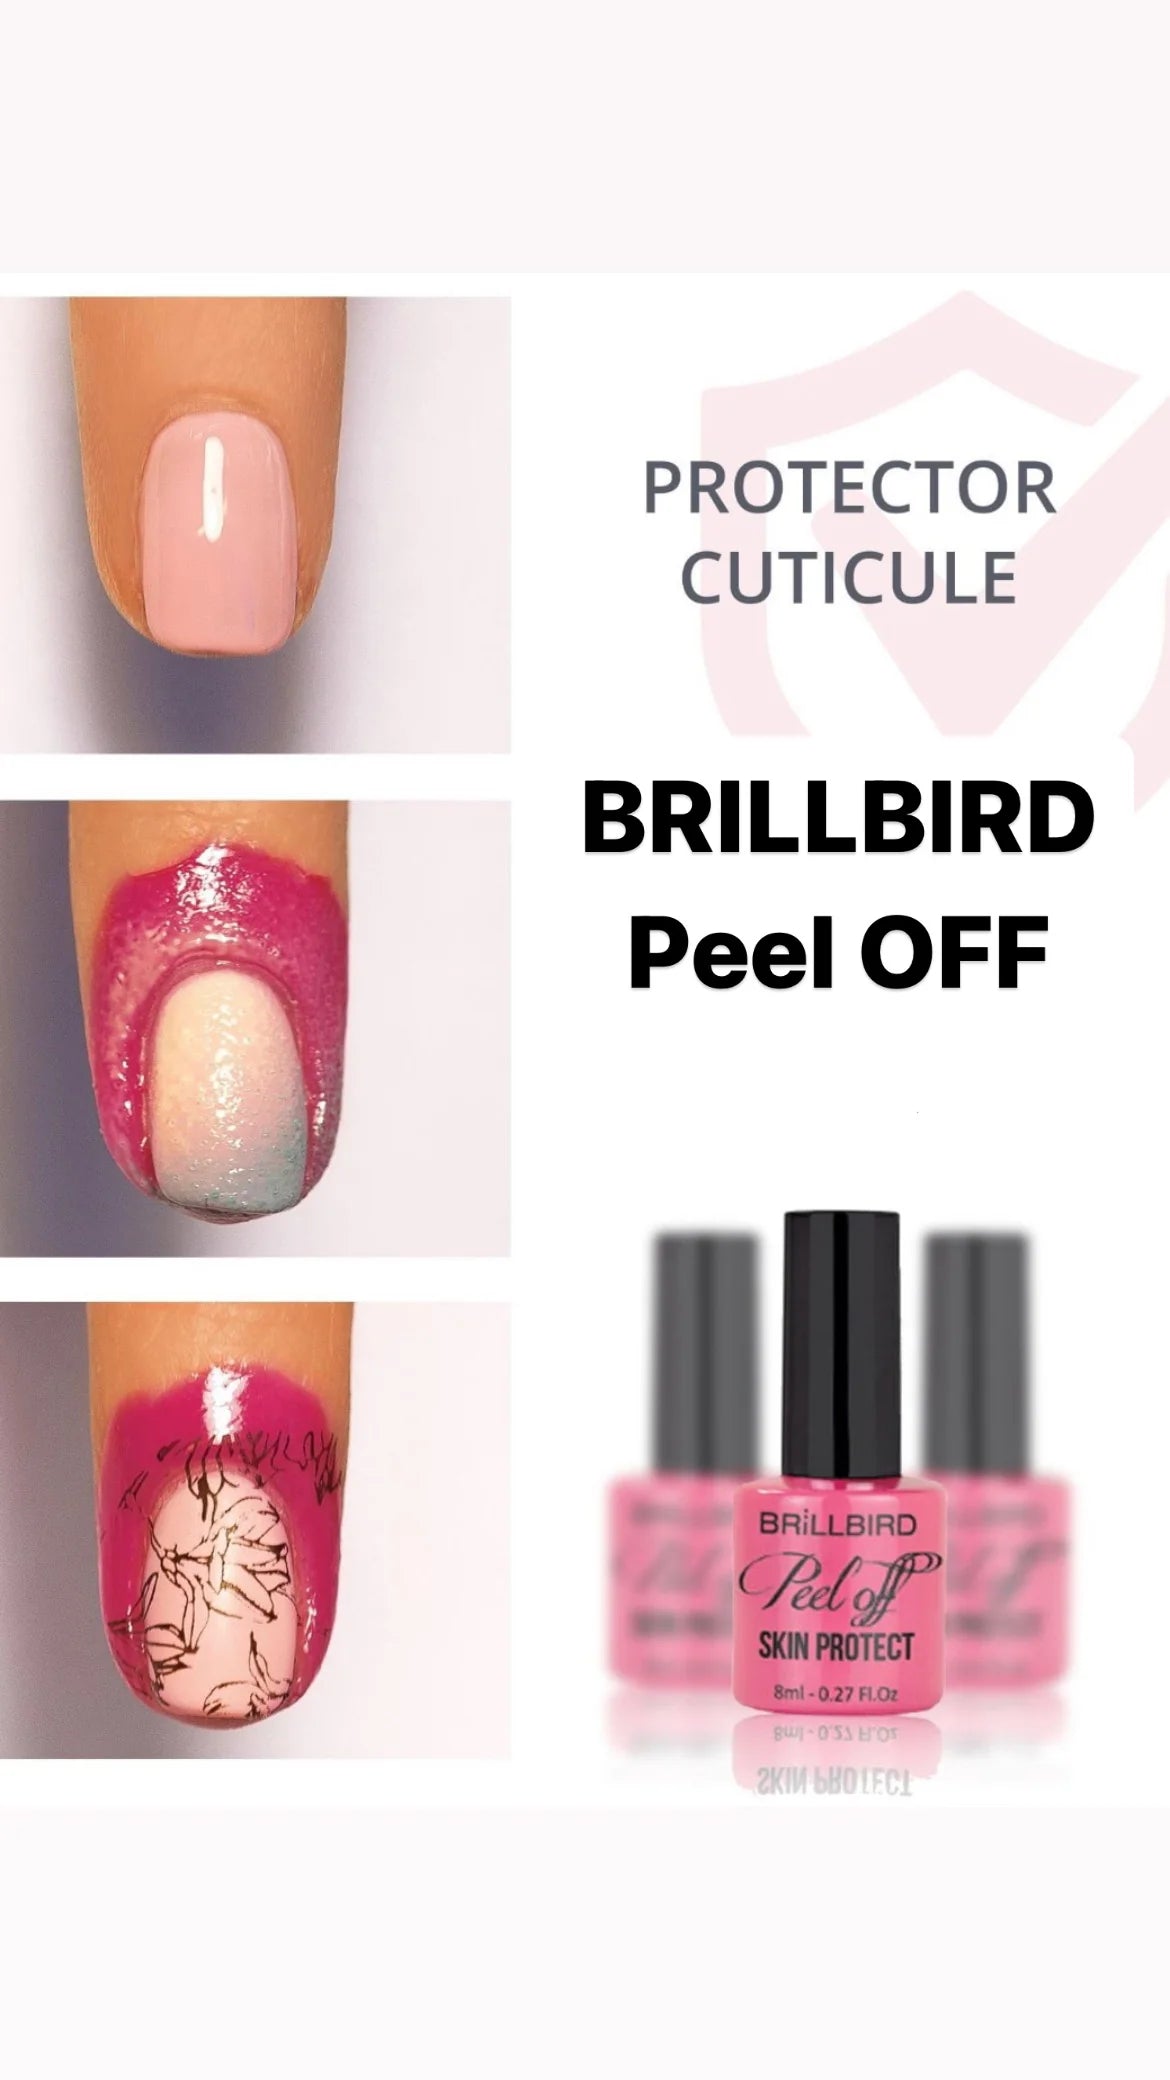 Brillbird Peel-off Skin Protector